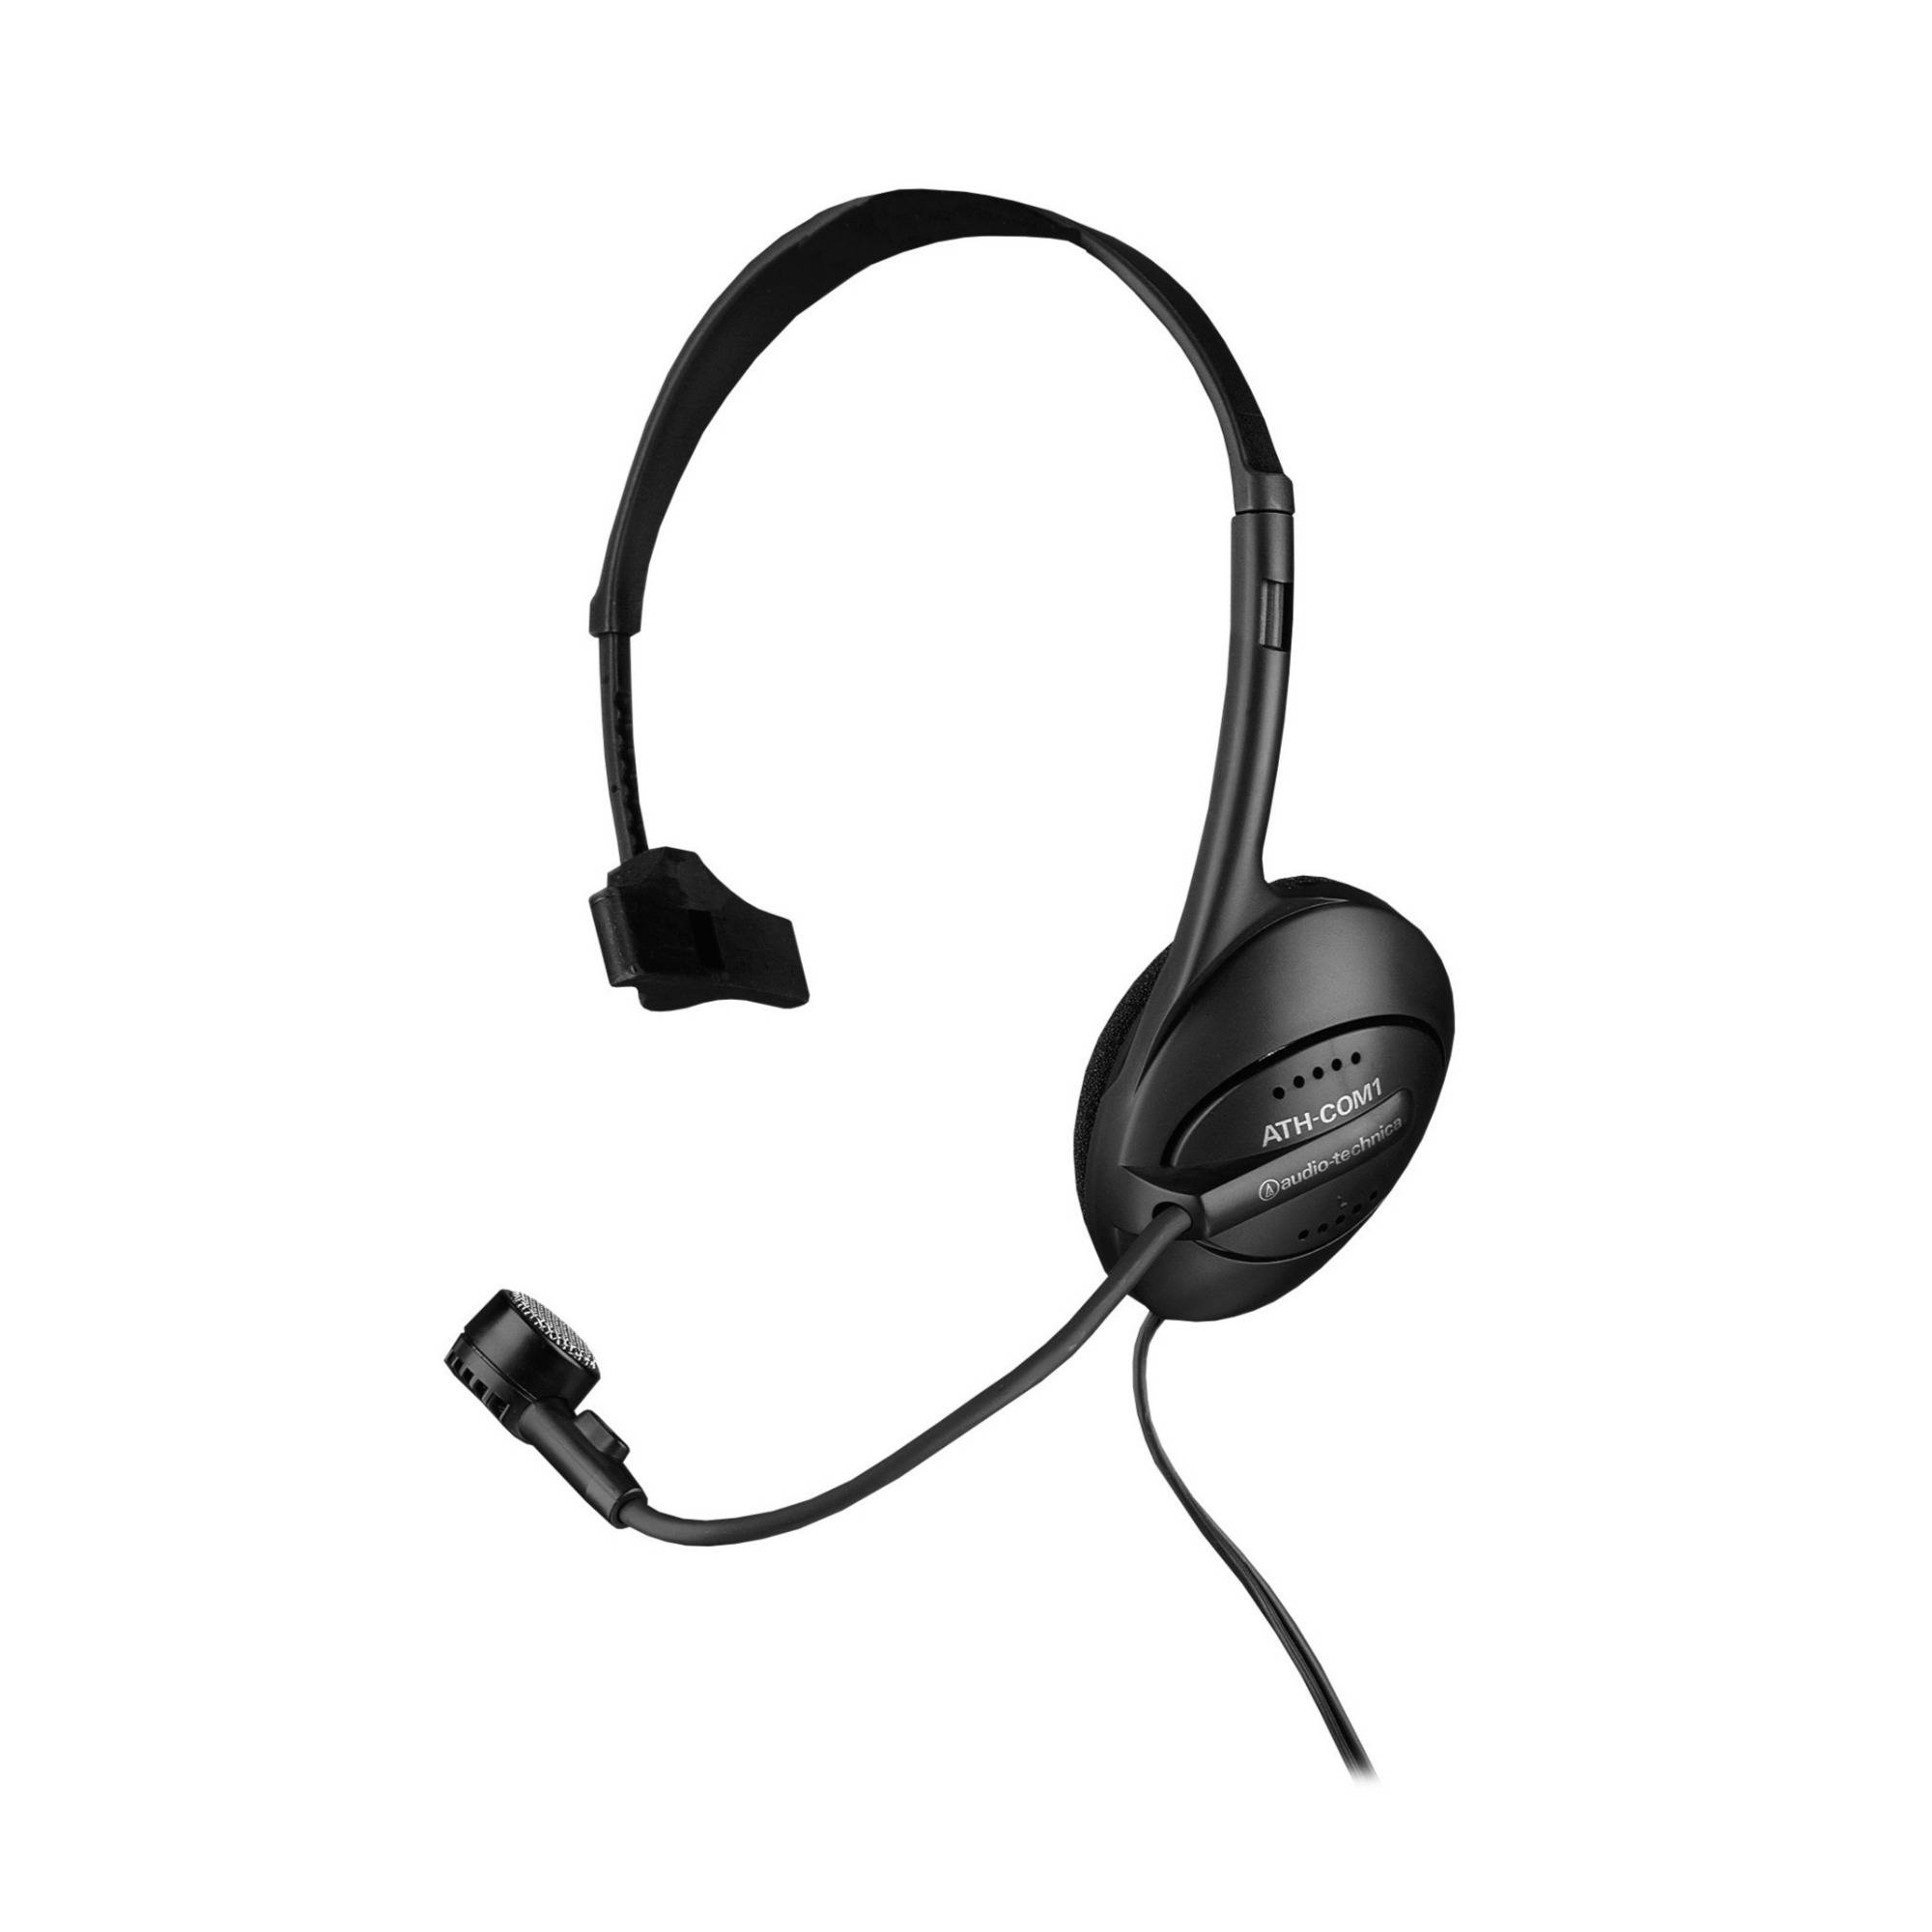 Audio-Technica ATH-COM1 Monophone/Dynamic Boom Microphone Combination Headset